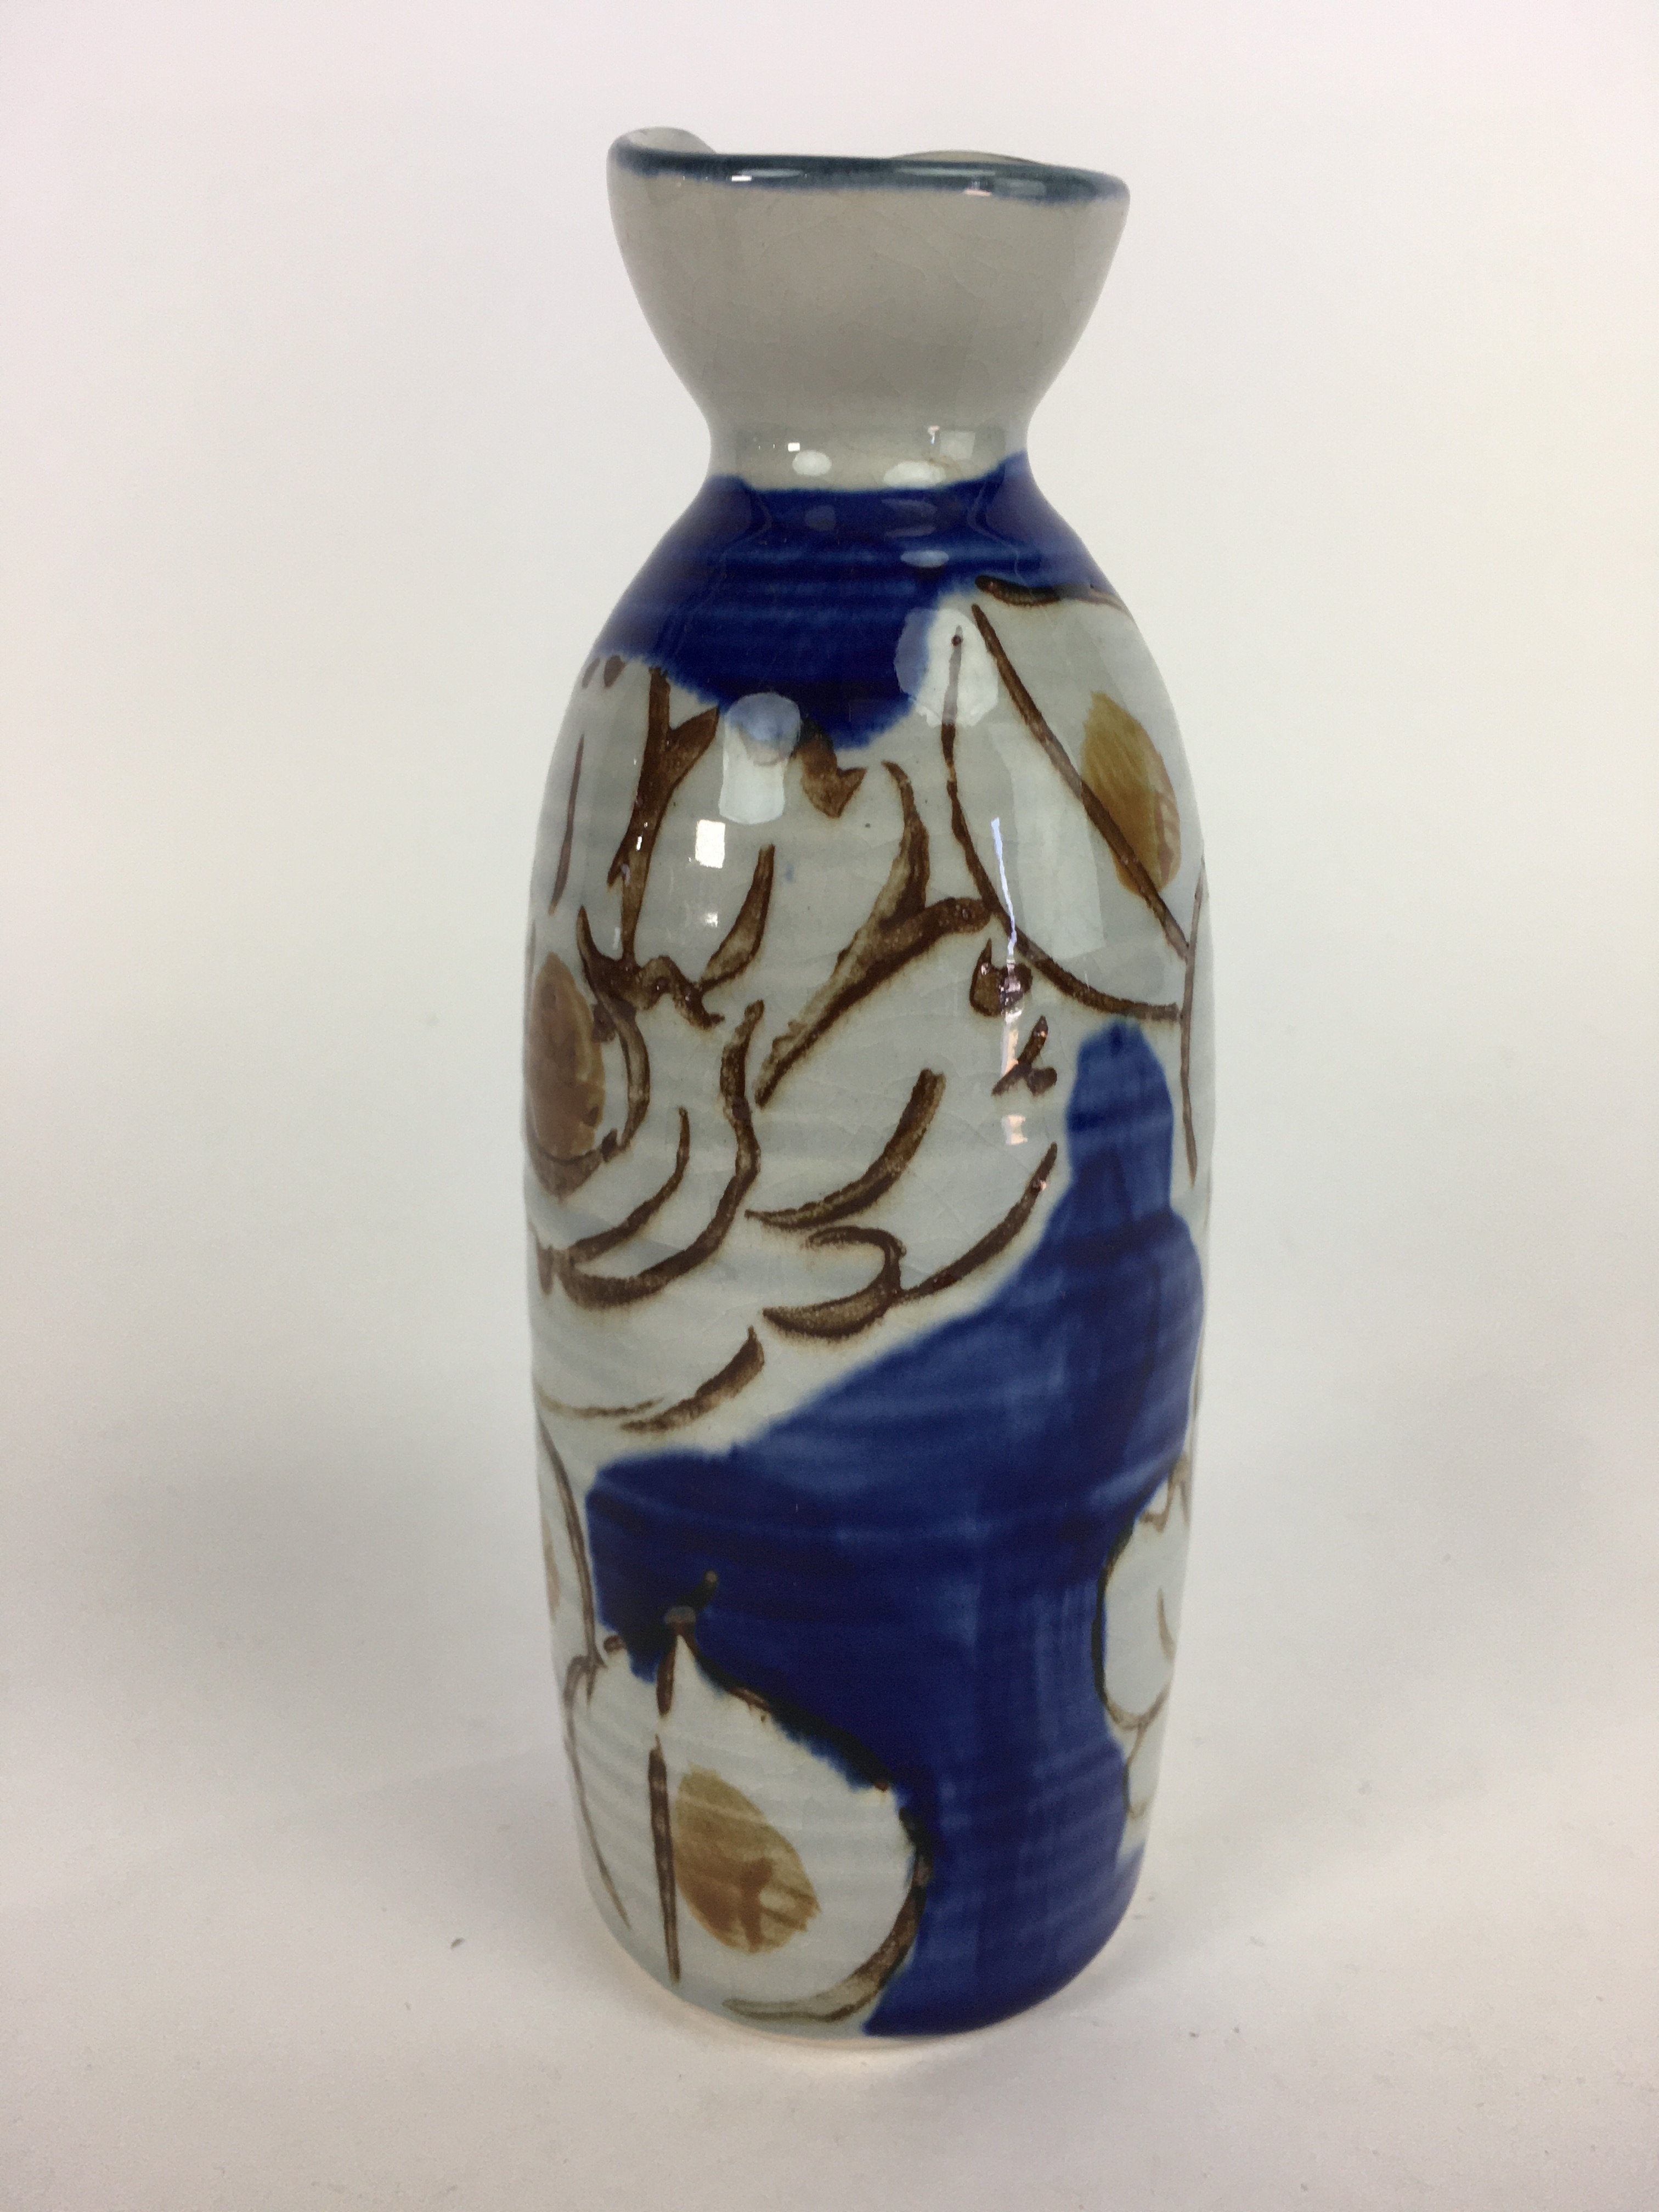 Japanese Ceramic Sake Bottle Tokkuri Vtg Pottery Blue Hand Drawn Picture TS261